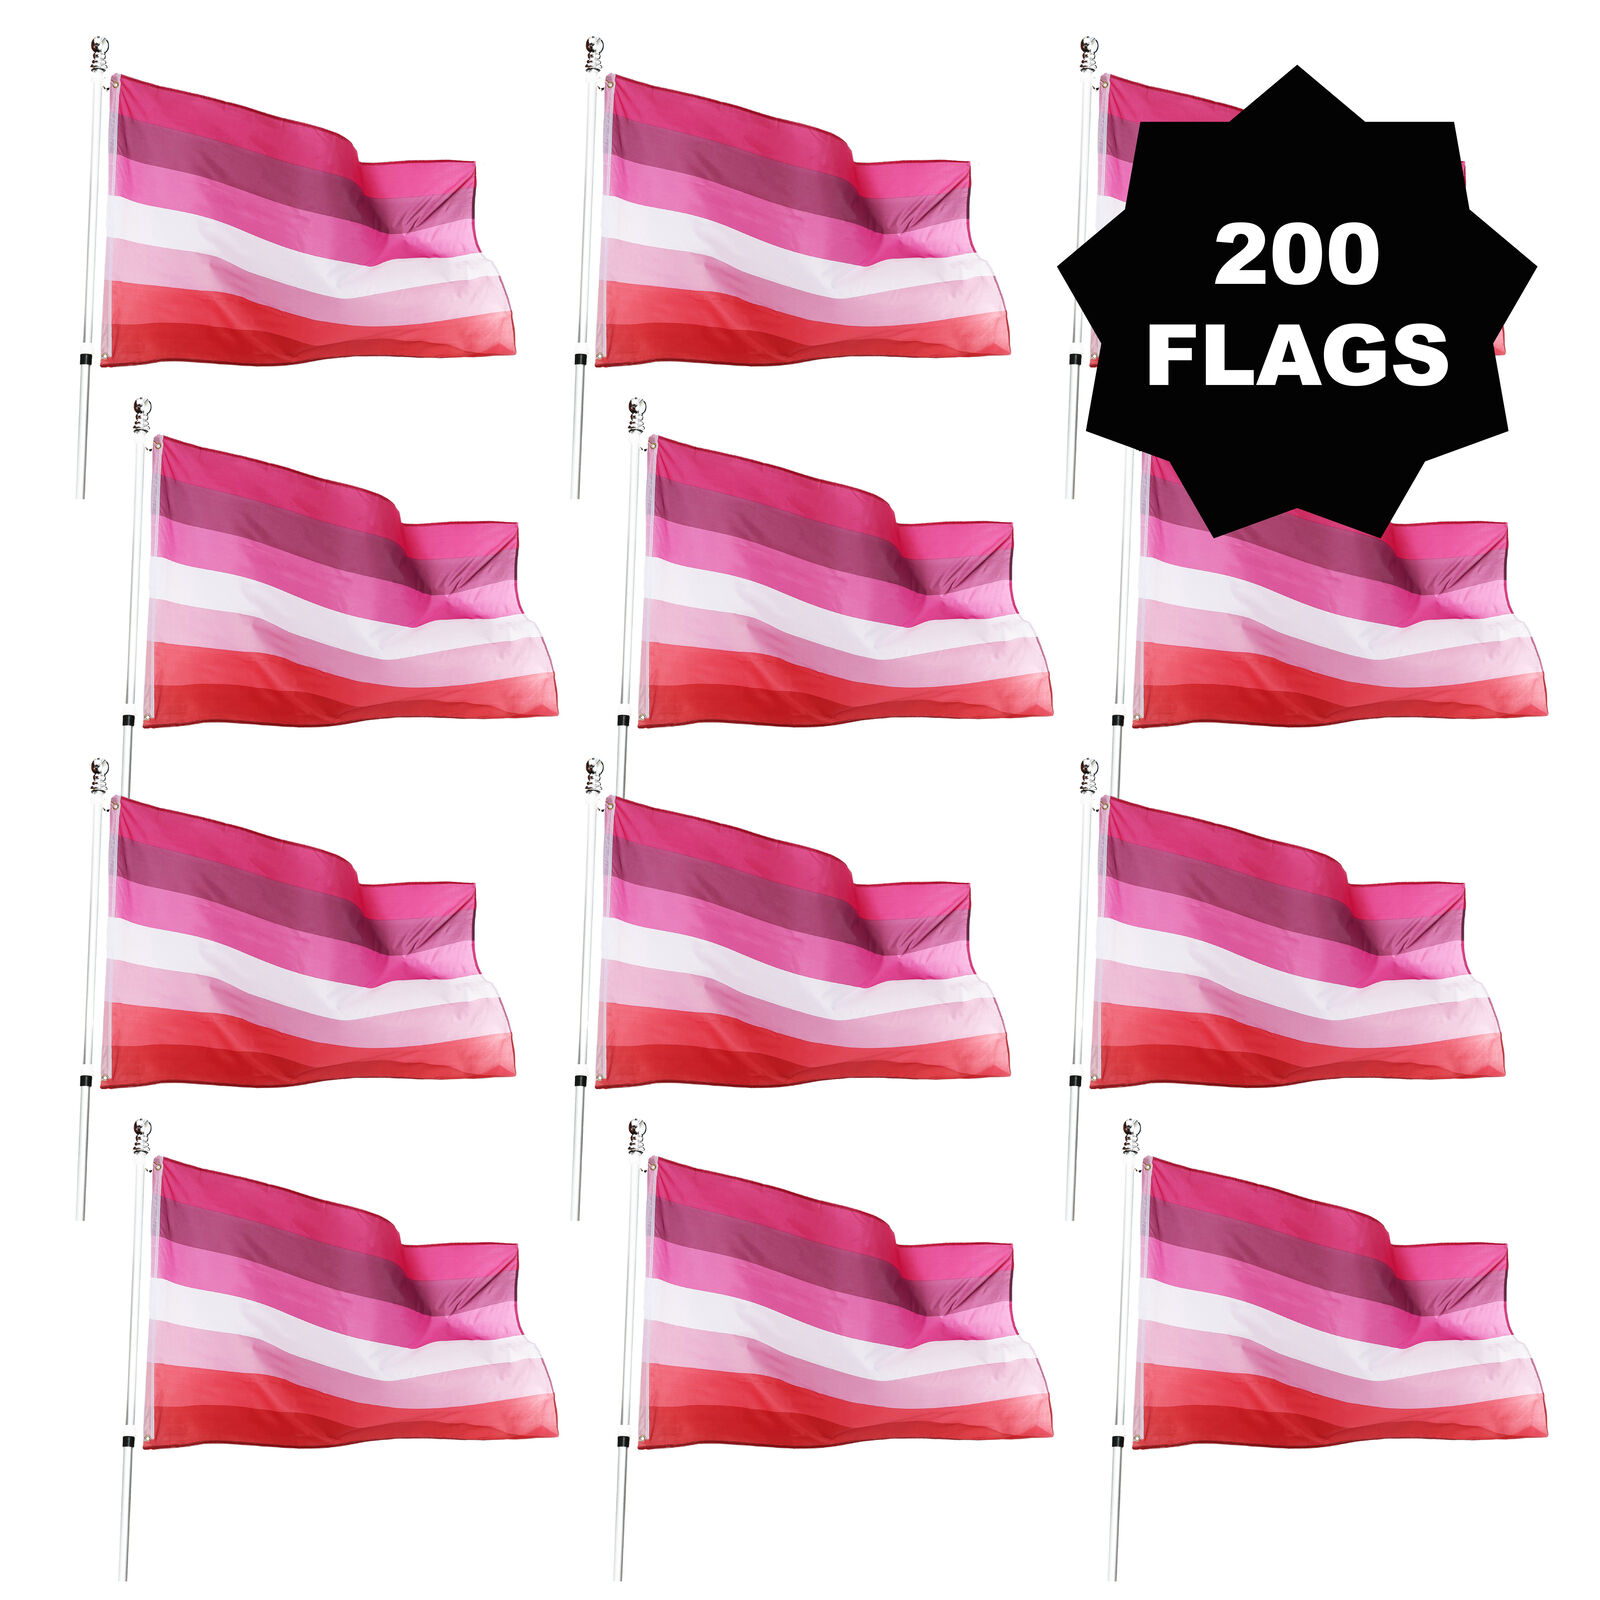 WHOLESALE 200 LESBIAN PRIDE FLAGS LGBT+ GAY PRIDE FLAGS FESTIVAL CARNIVAL